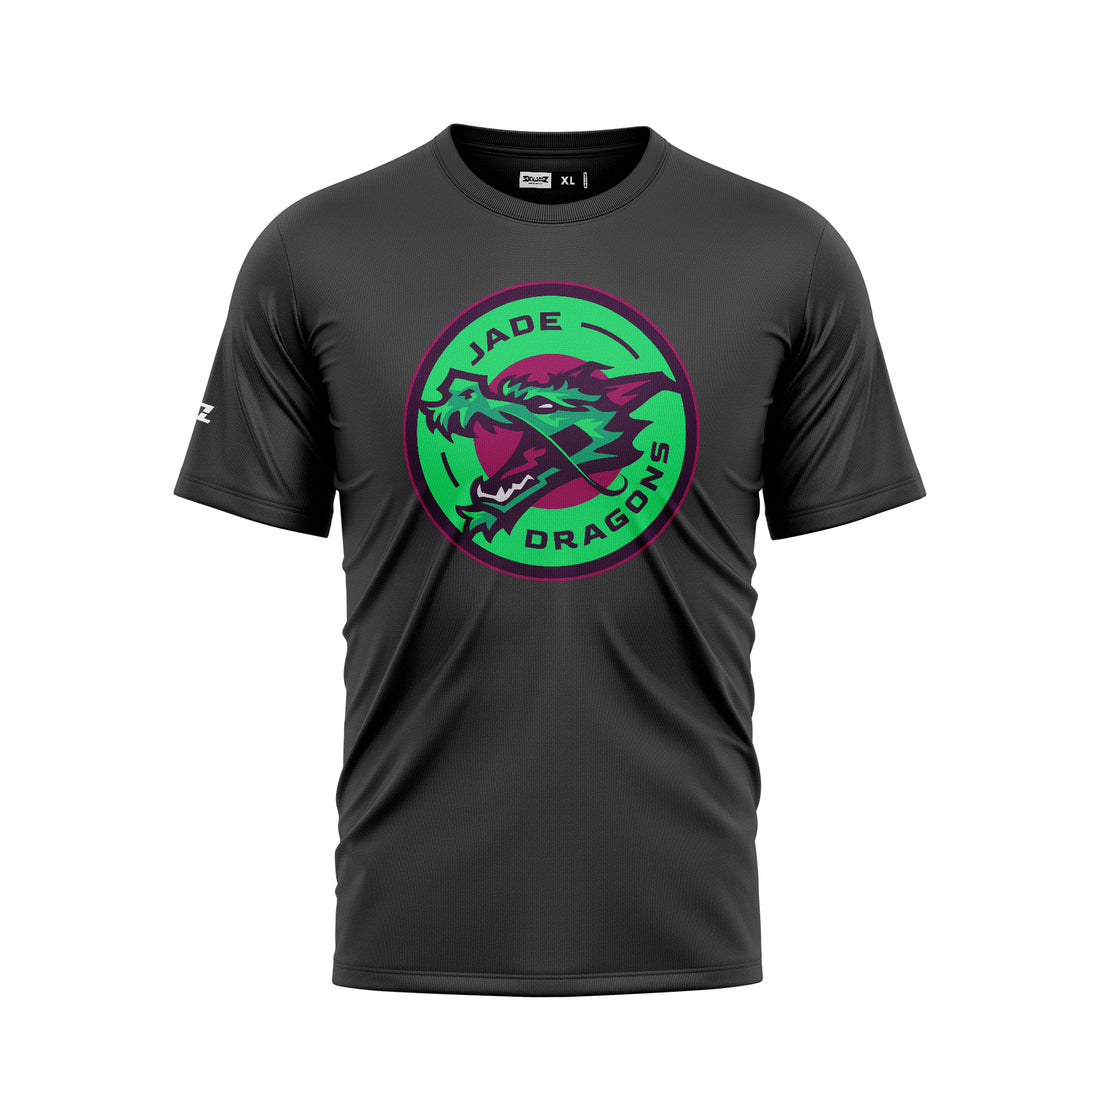 Jade Dragons Emblem Shirt